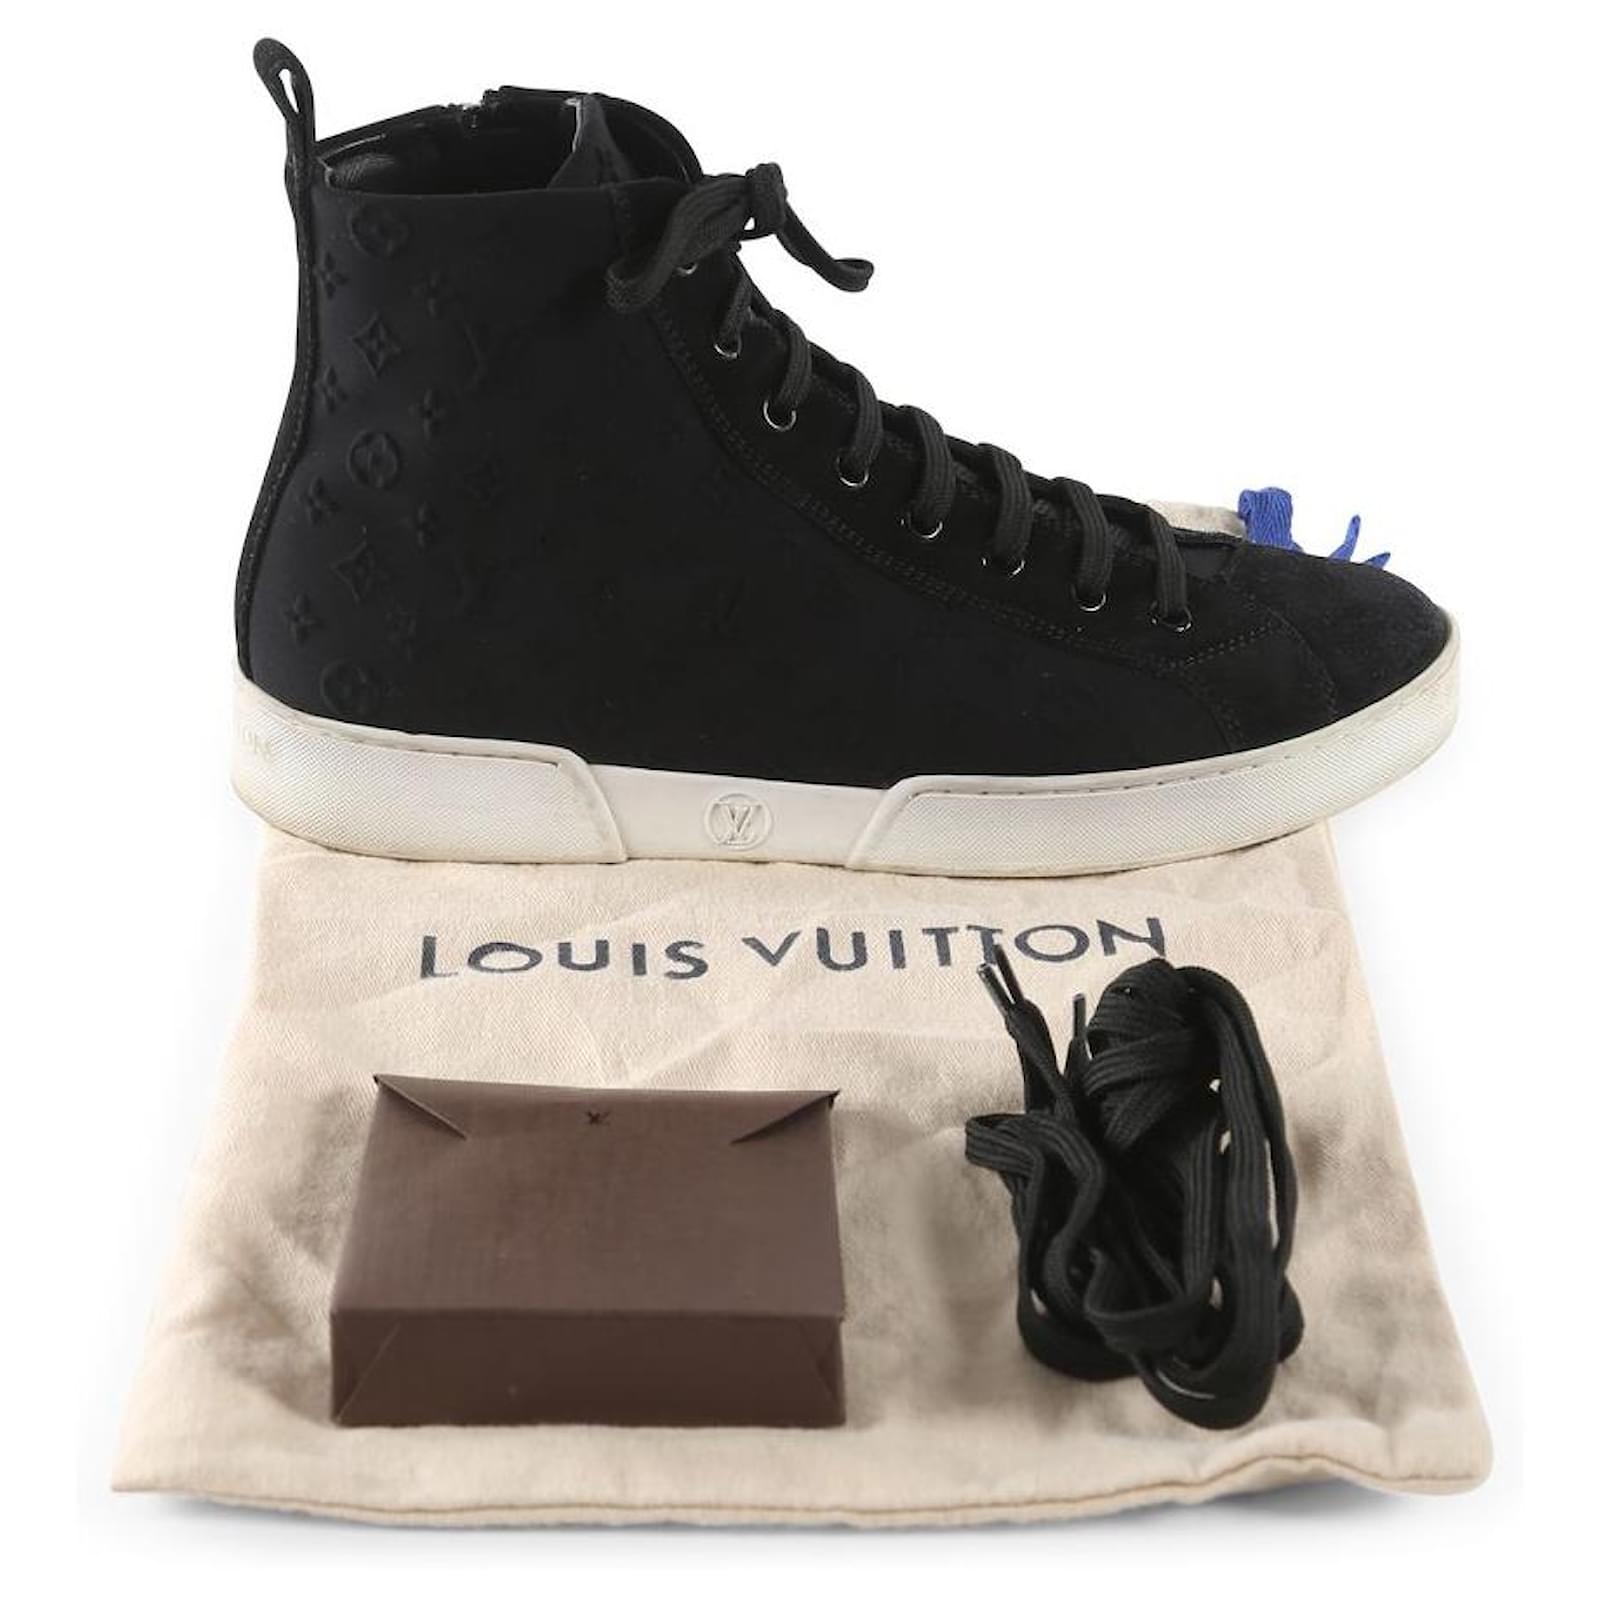 Louis Vuitton, Shoes, Louis Vuitton Suede Black High Tops Like New 8